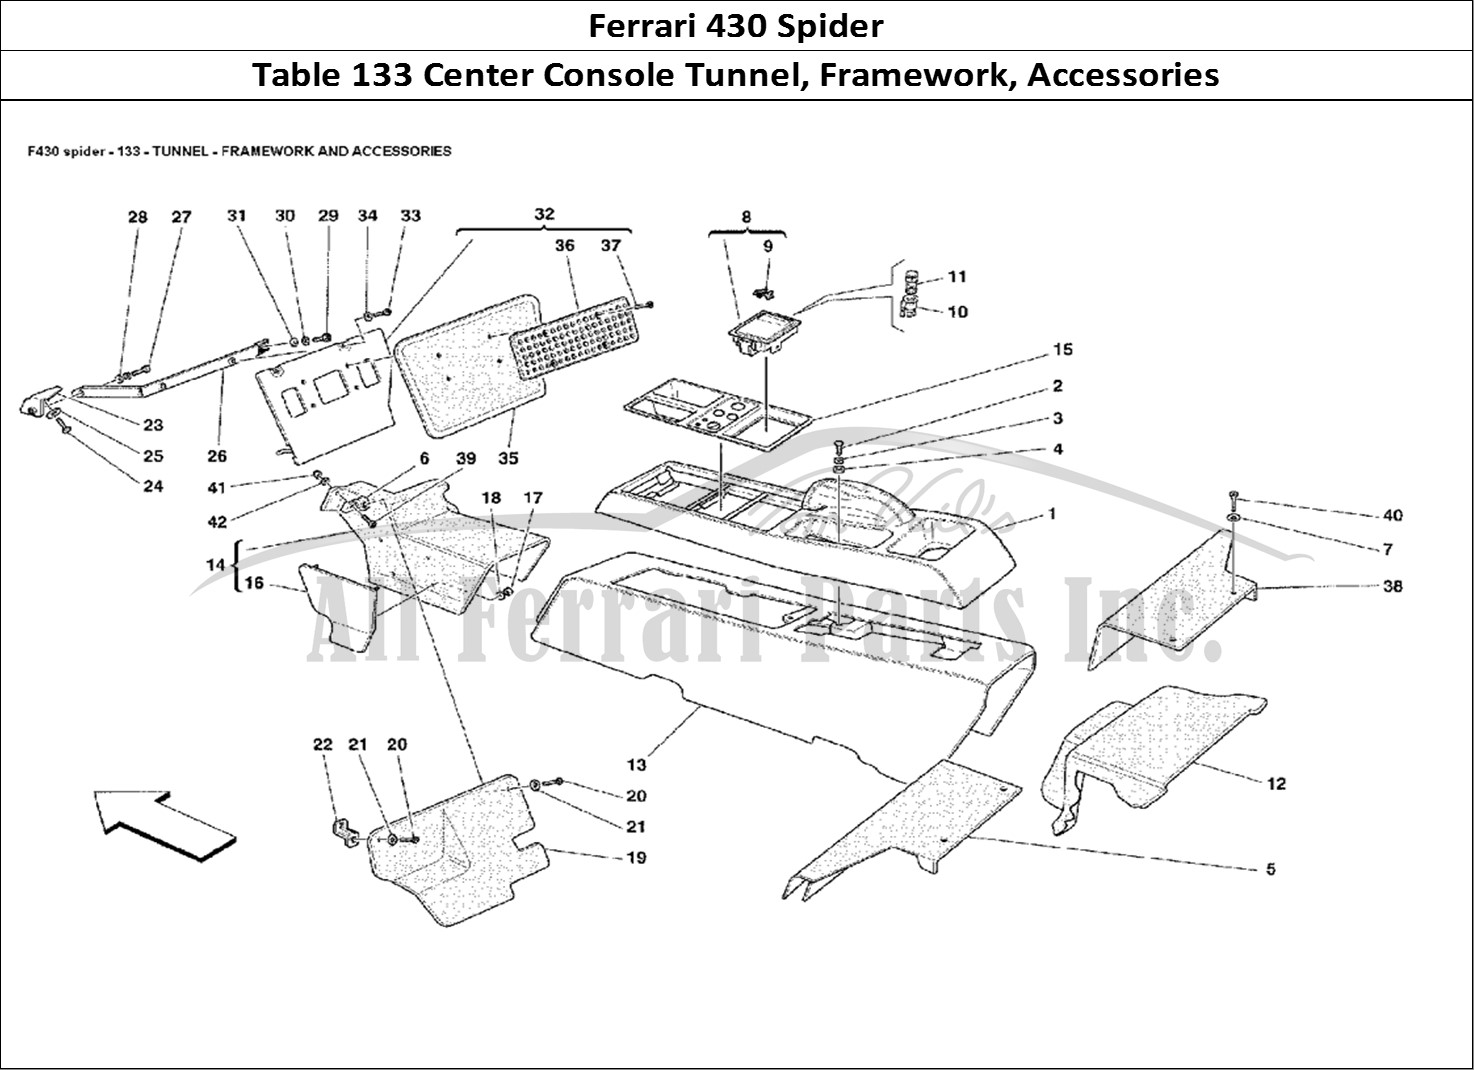 Ferrari Parts Ferrari 430 Spider Page 133 Tunnel - Framework and Ac